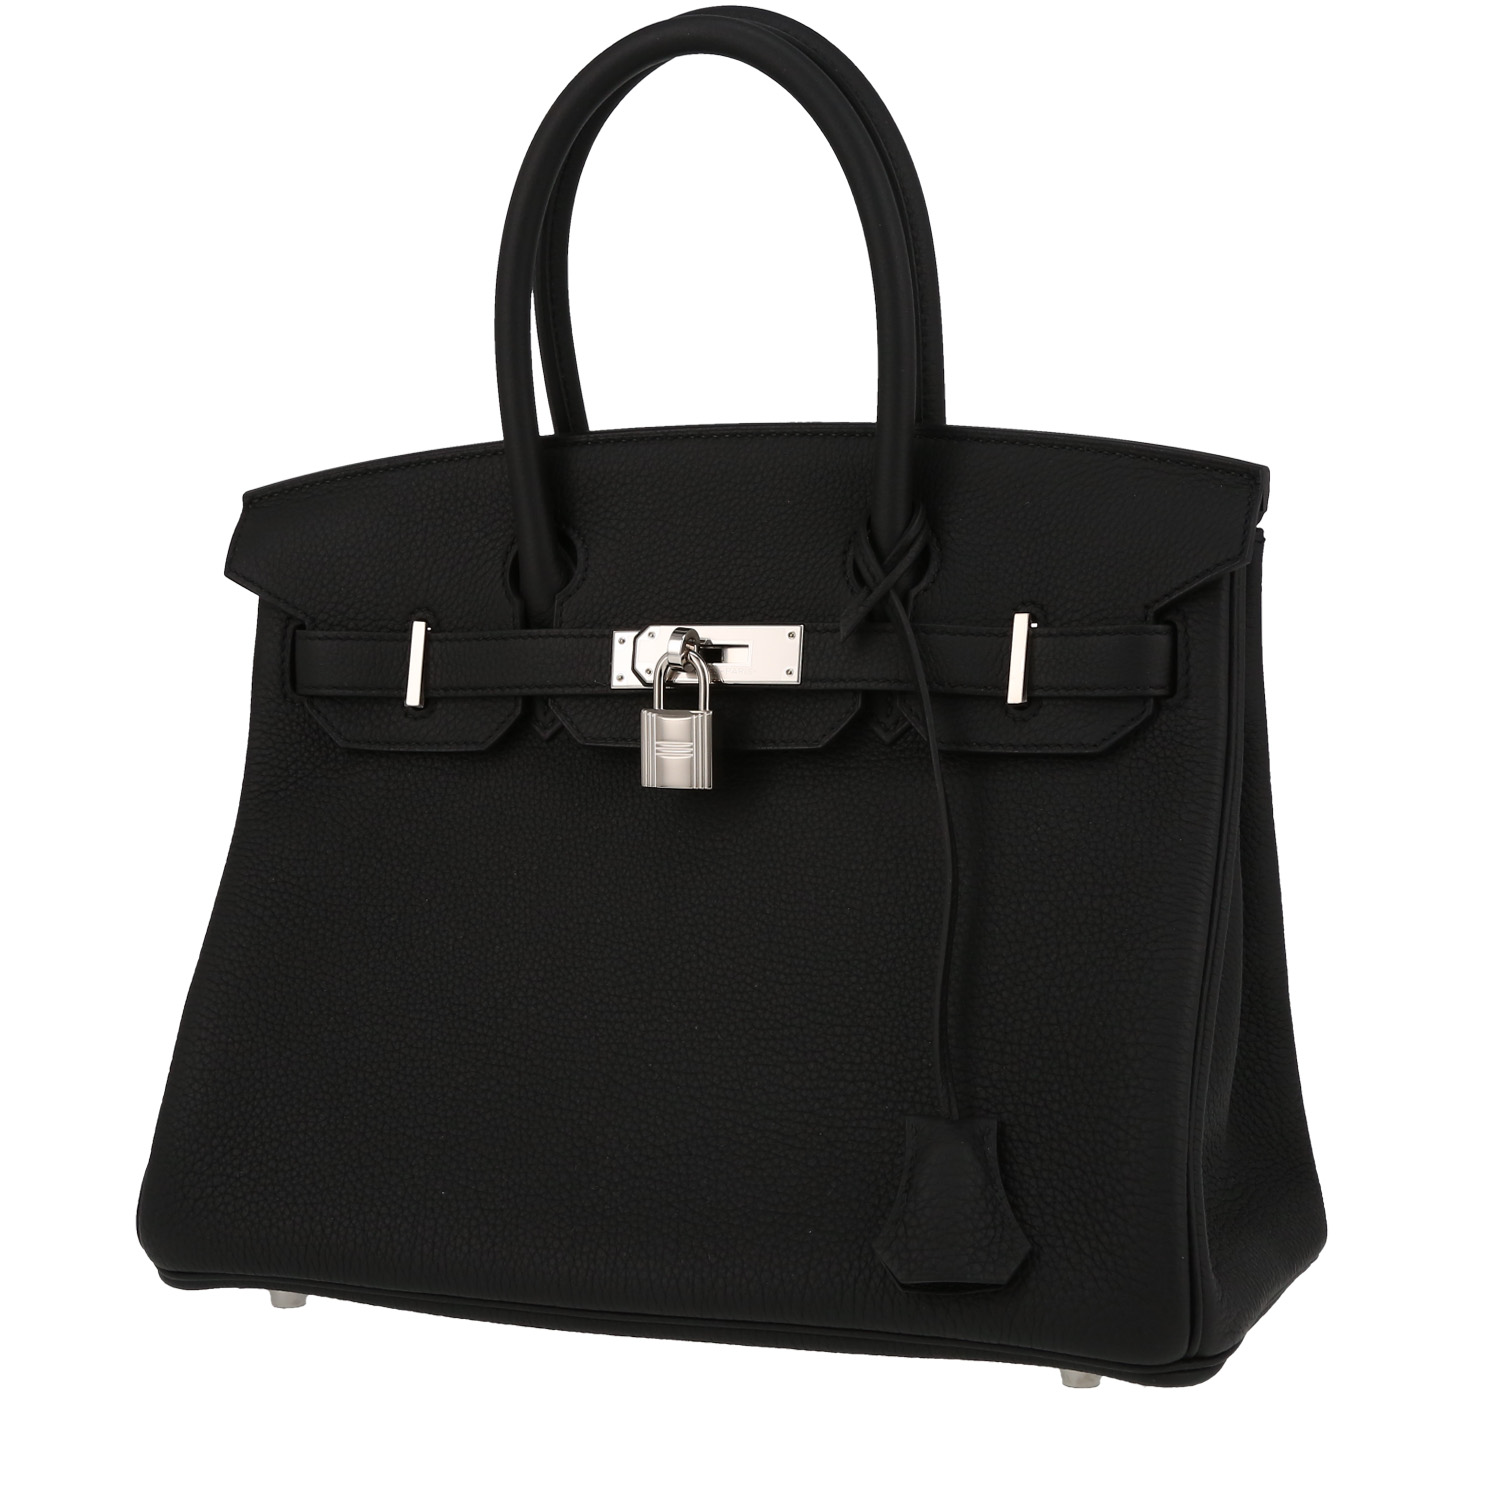 Hermes Birkin 30 cm handbag in black togo leather - 00pp